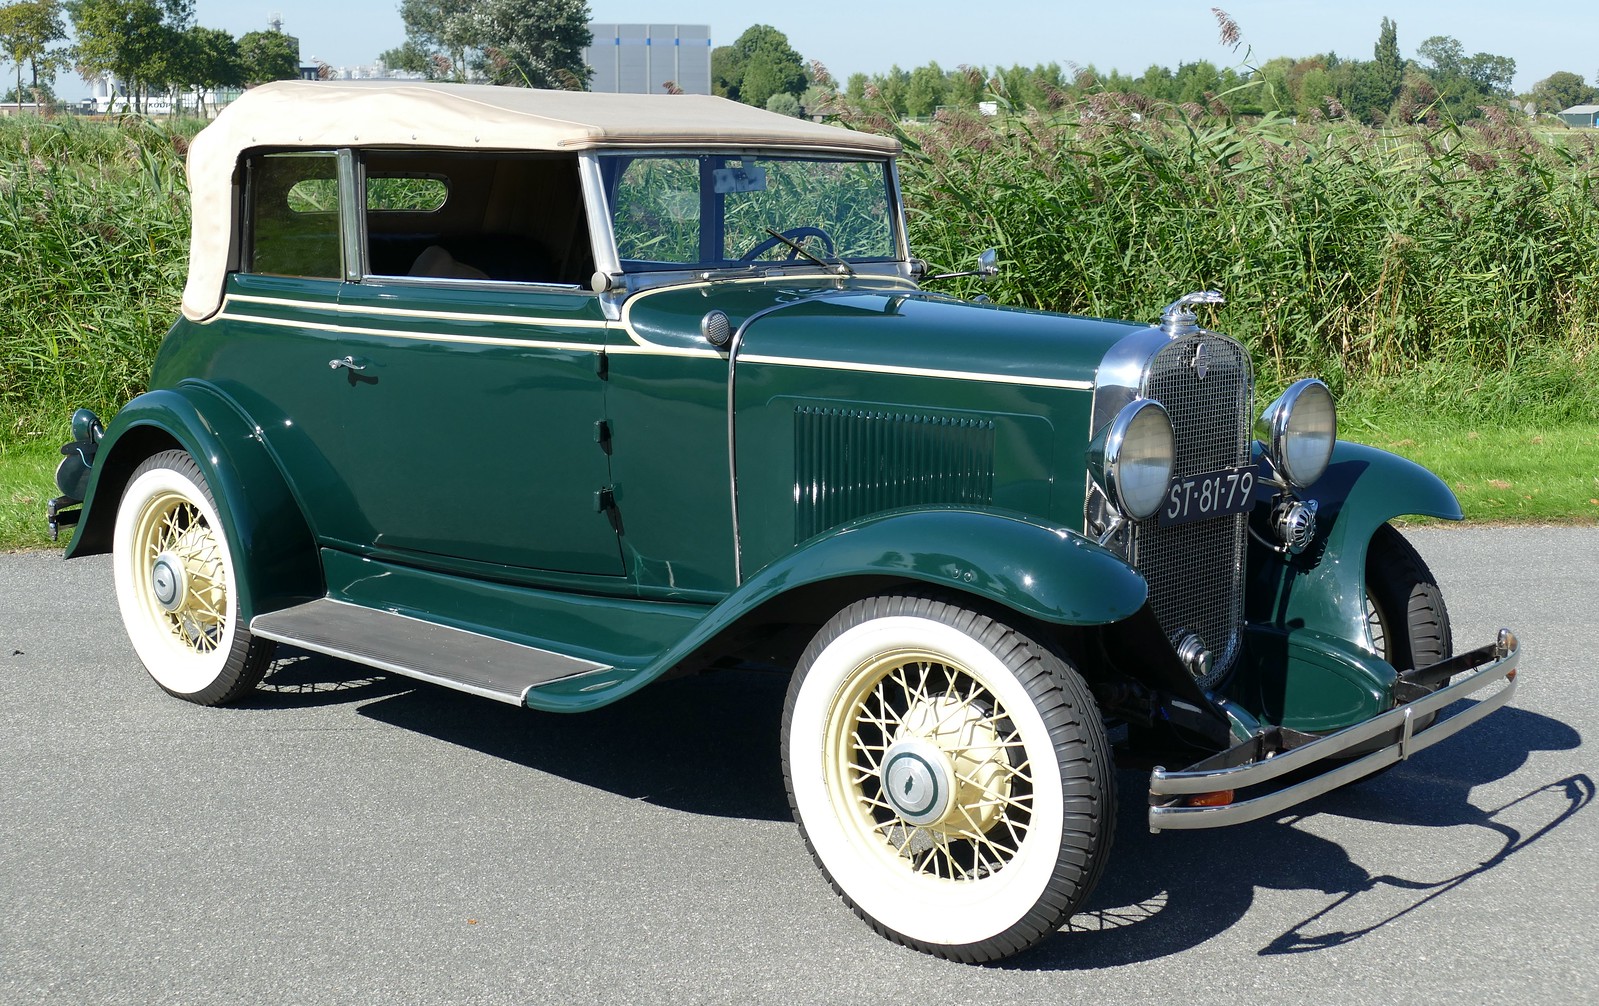 Chevrolet Landau Phaeton 1931